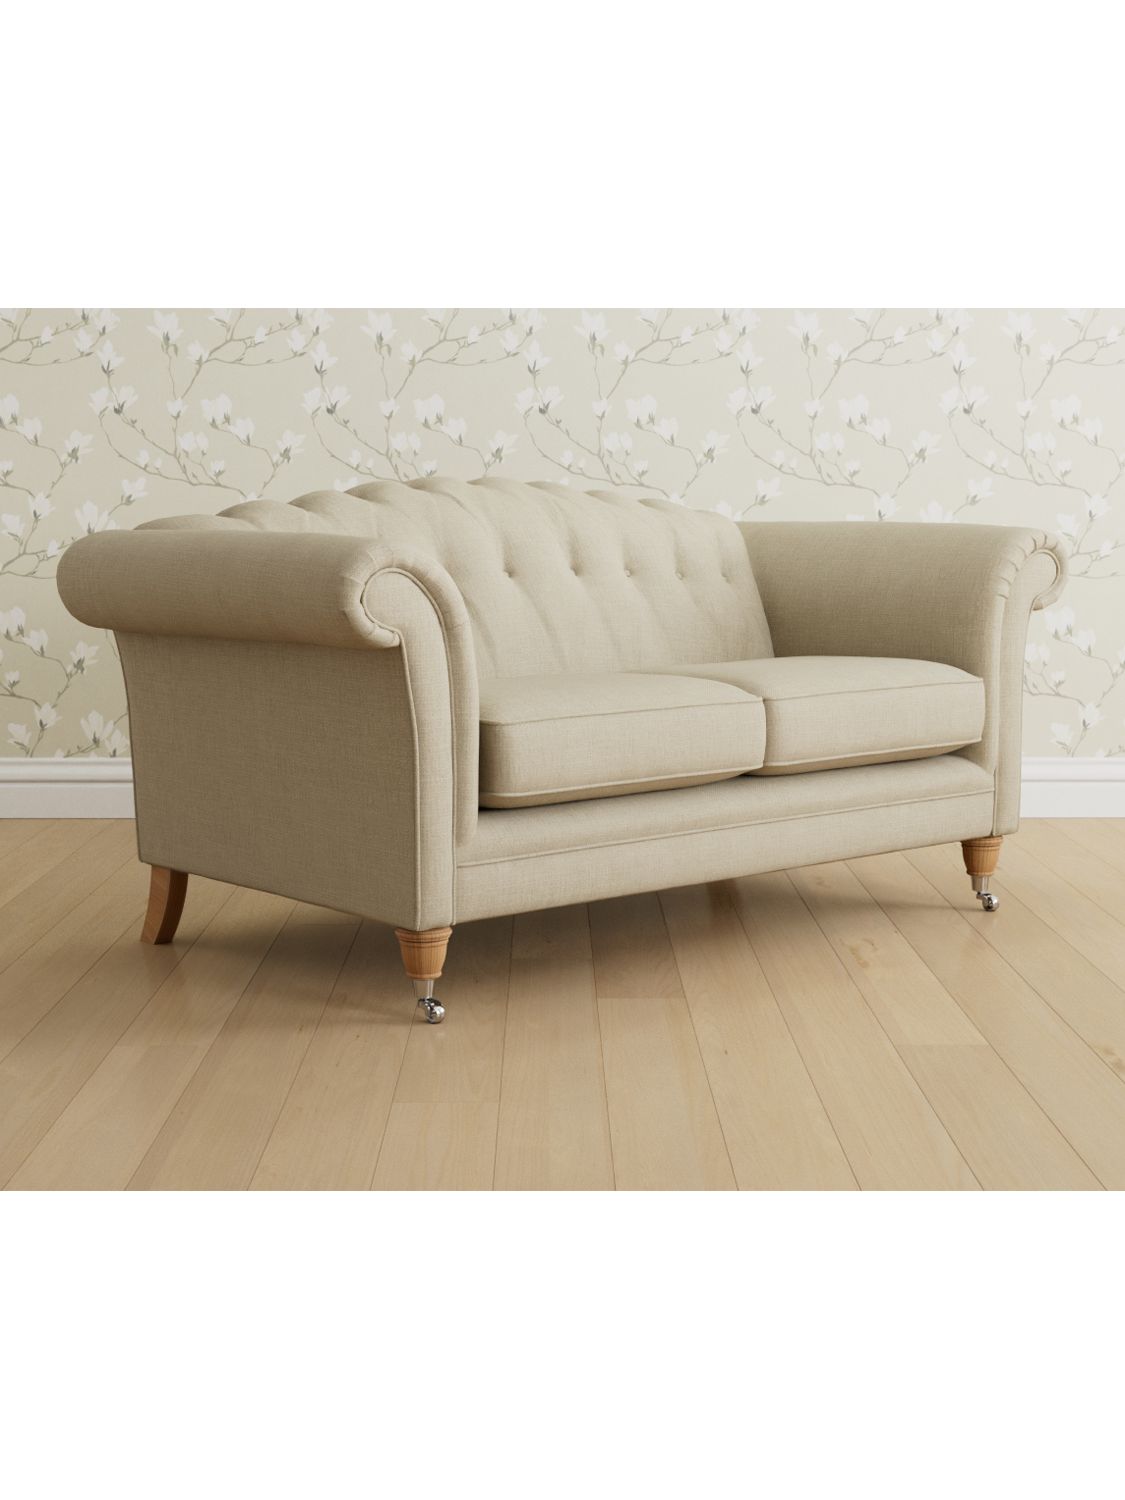 Gloucester Range, Laura Ashley Gloucester Medium 2 Seater Sofa, Oak Leg, Wooton Natural